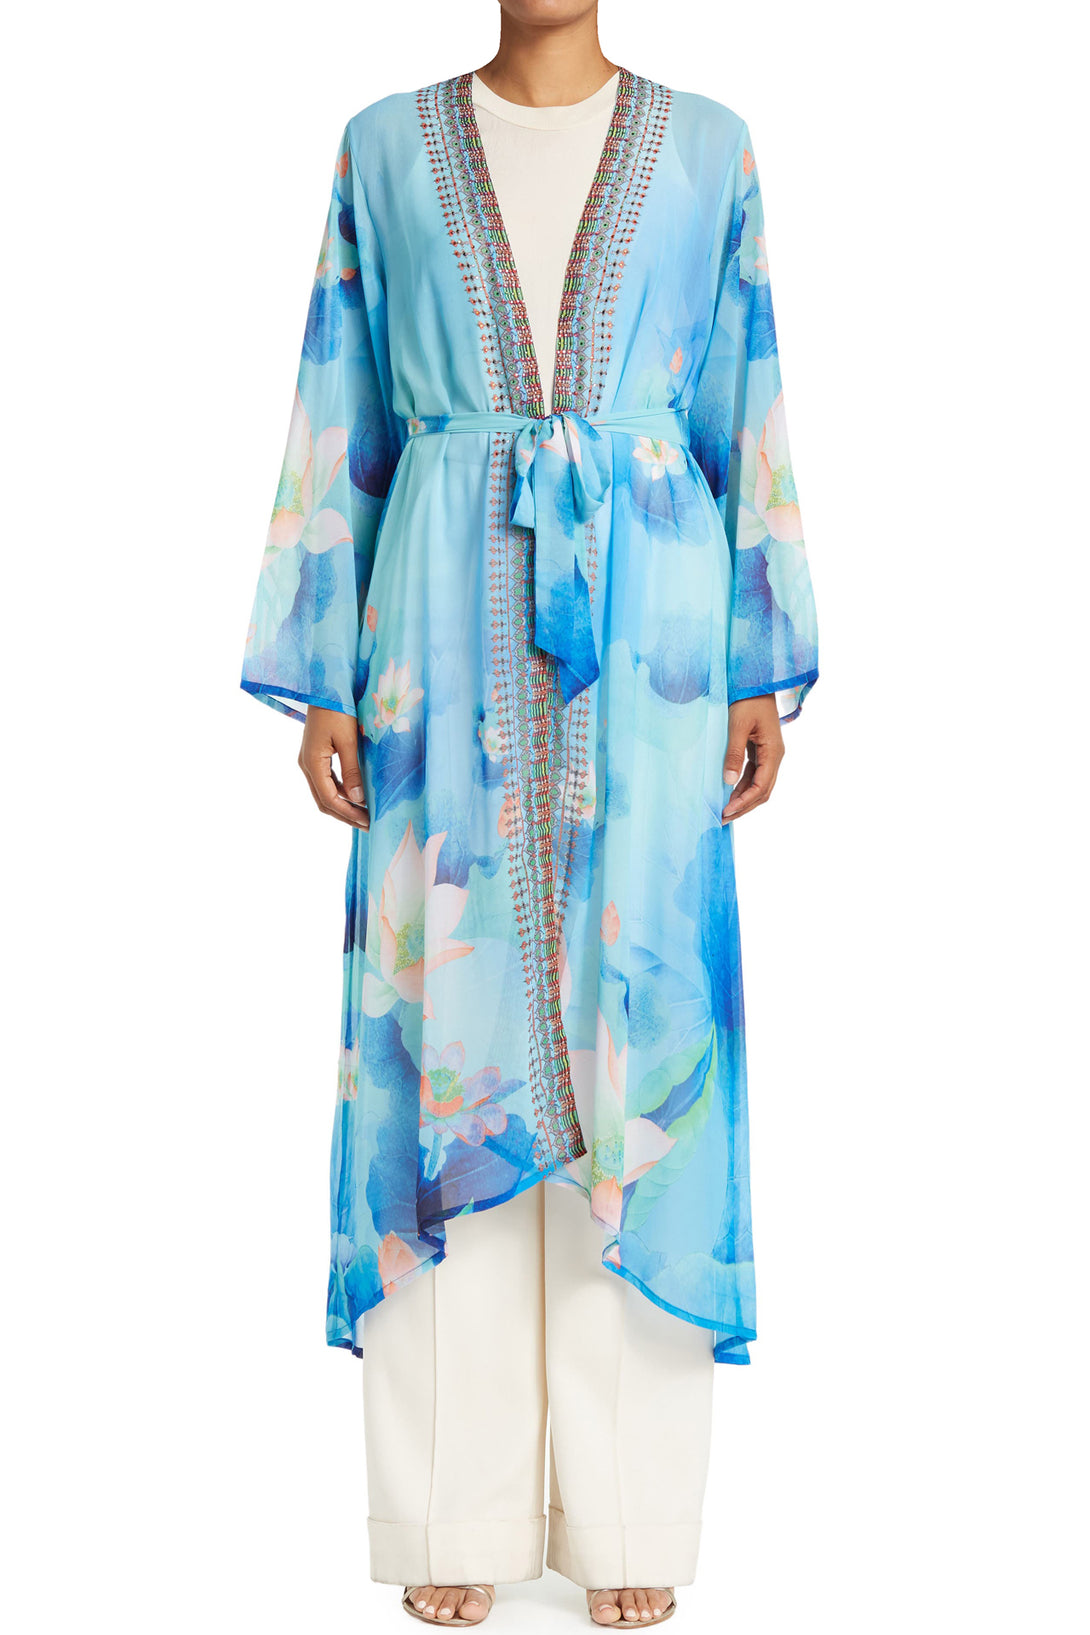  bathing suits and cover ups, Shahida Parides, designer beach cover ups, kimono bathing suit cover up,